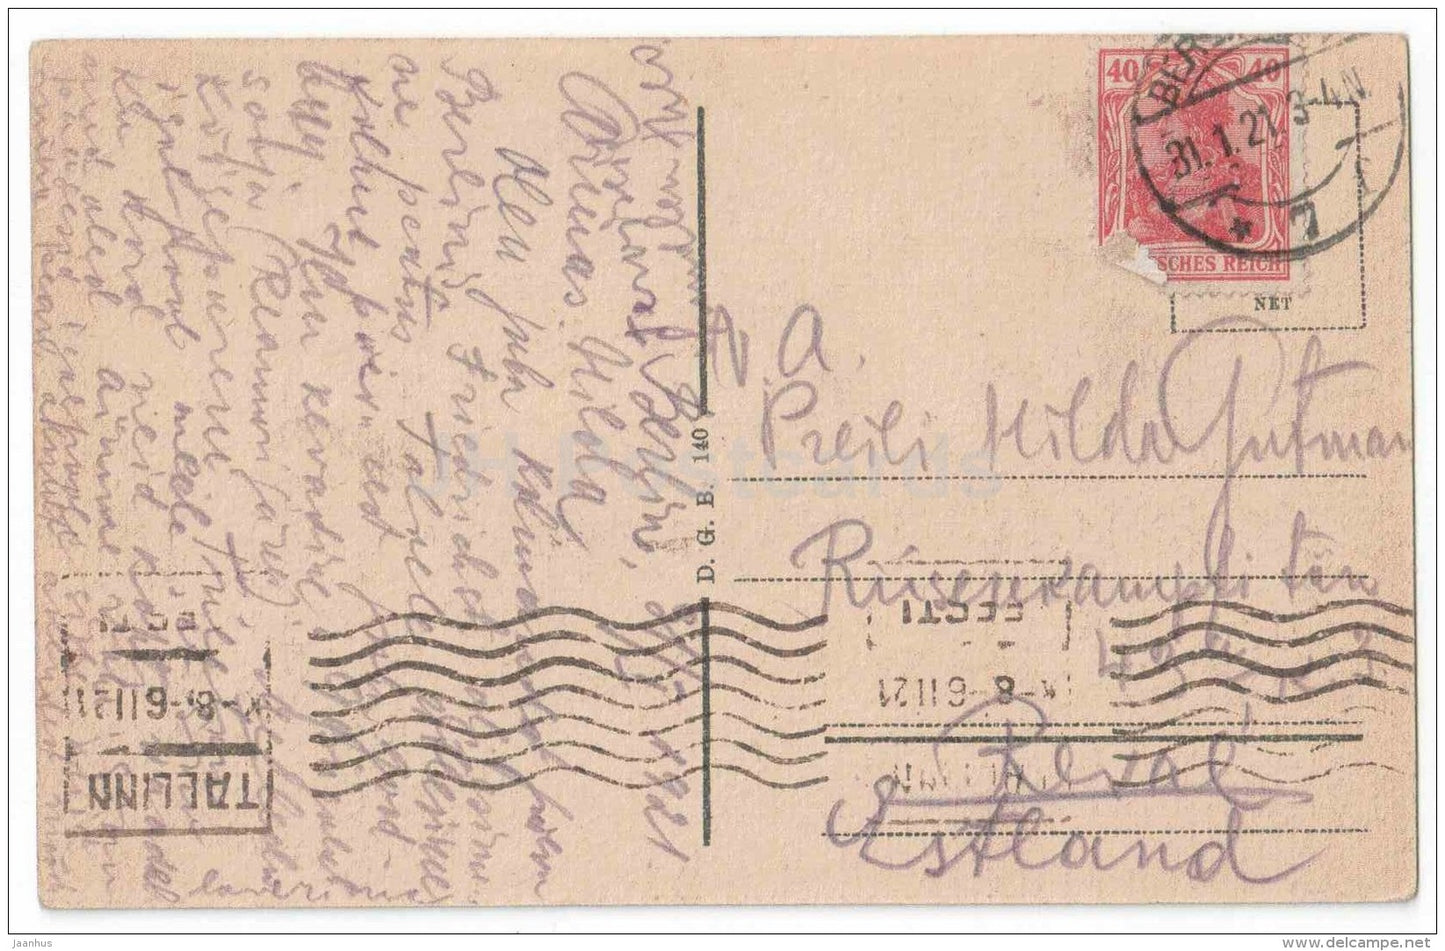 Bahnhof Friedrichstrasse - old cars - train - locomotive - Berlin - Germany - sent from Germany to Estonia Tallinn 1921 - JH Postcards